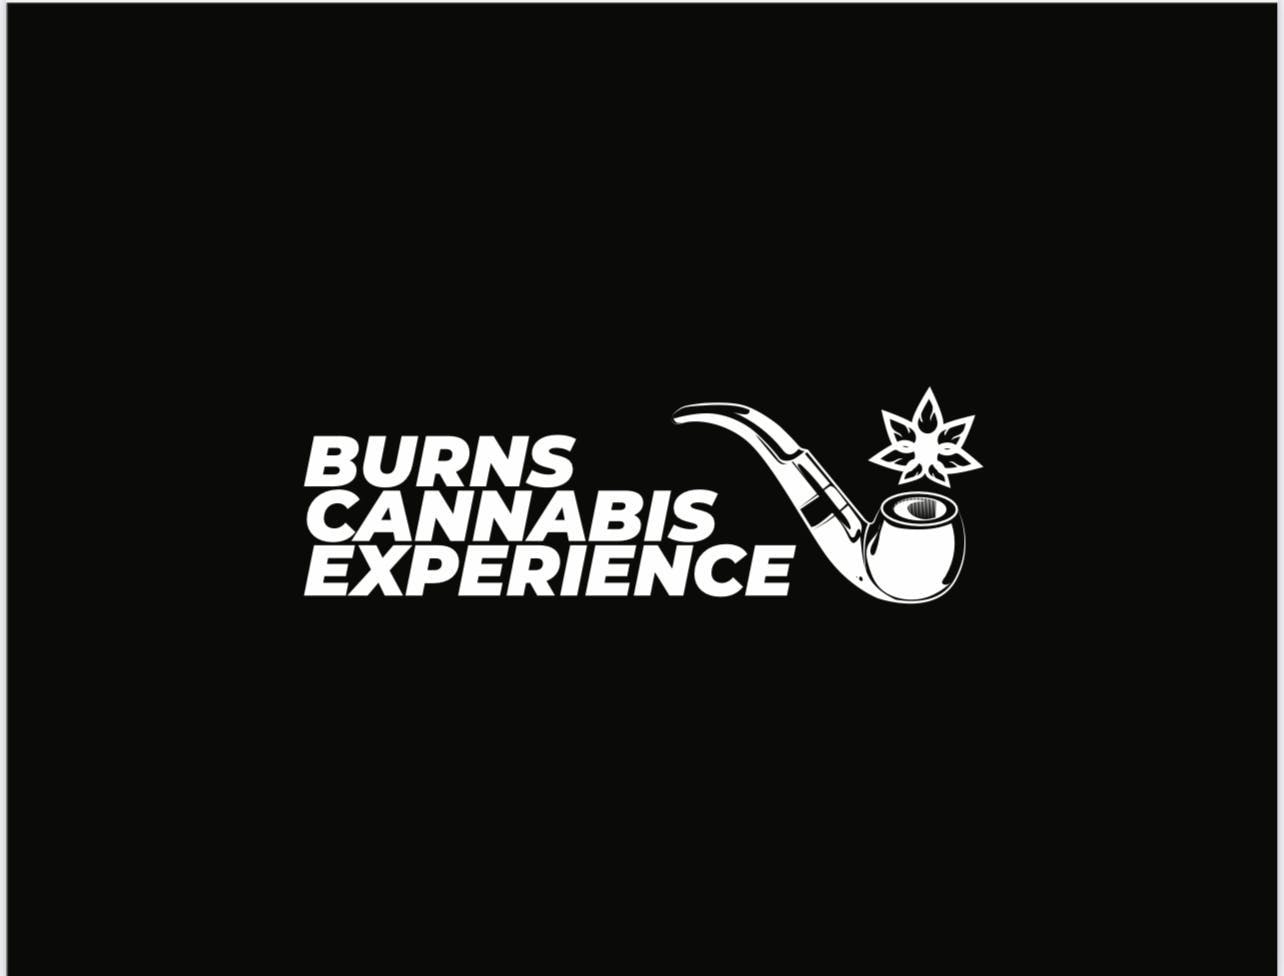 Burns Cannabis Experience logo